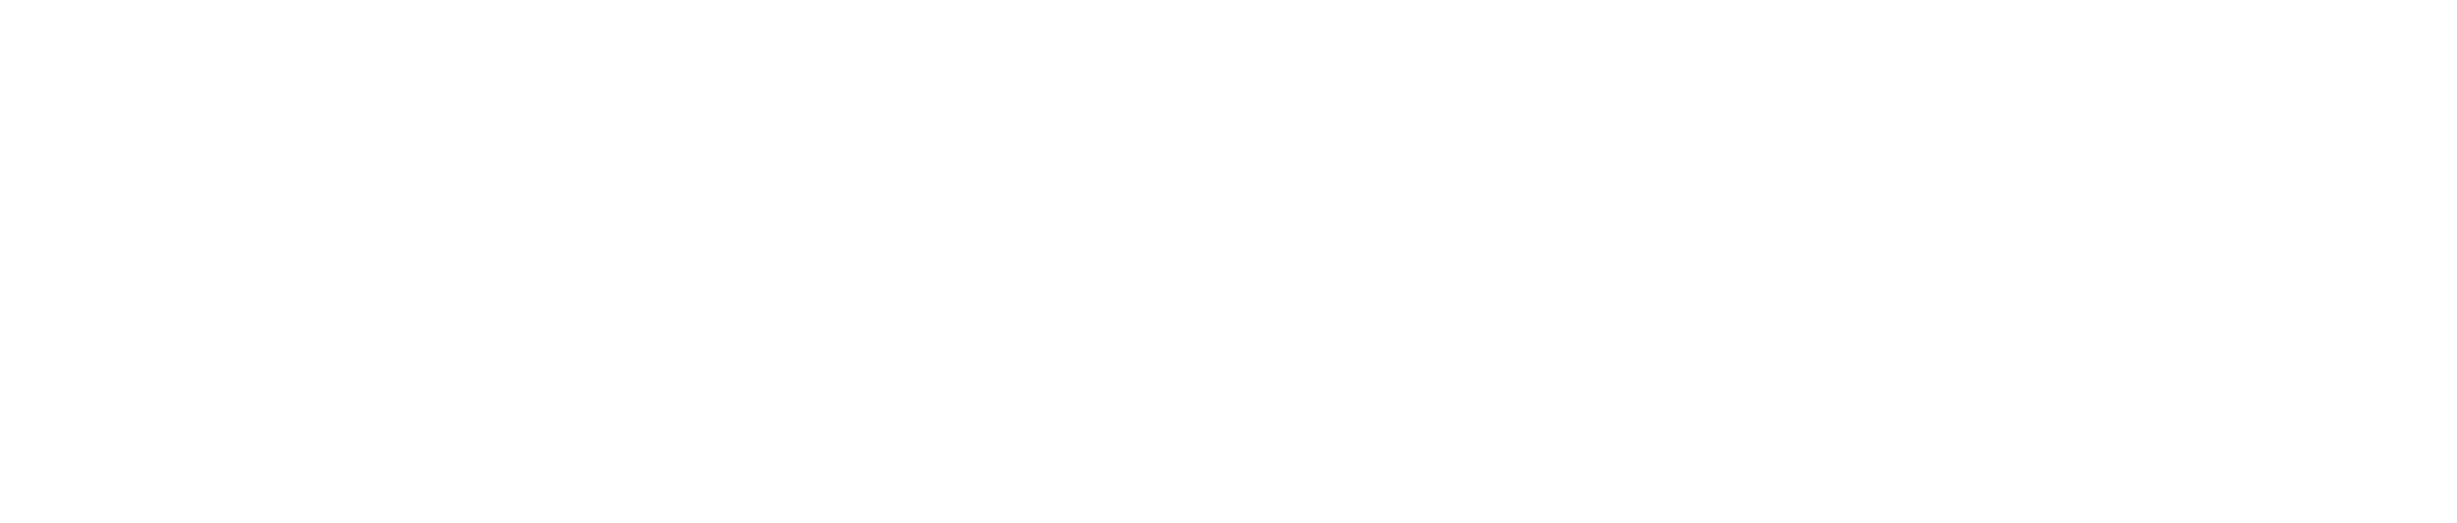 BNG_19_BingMaps_logo_white_RGB